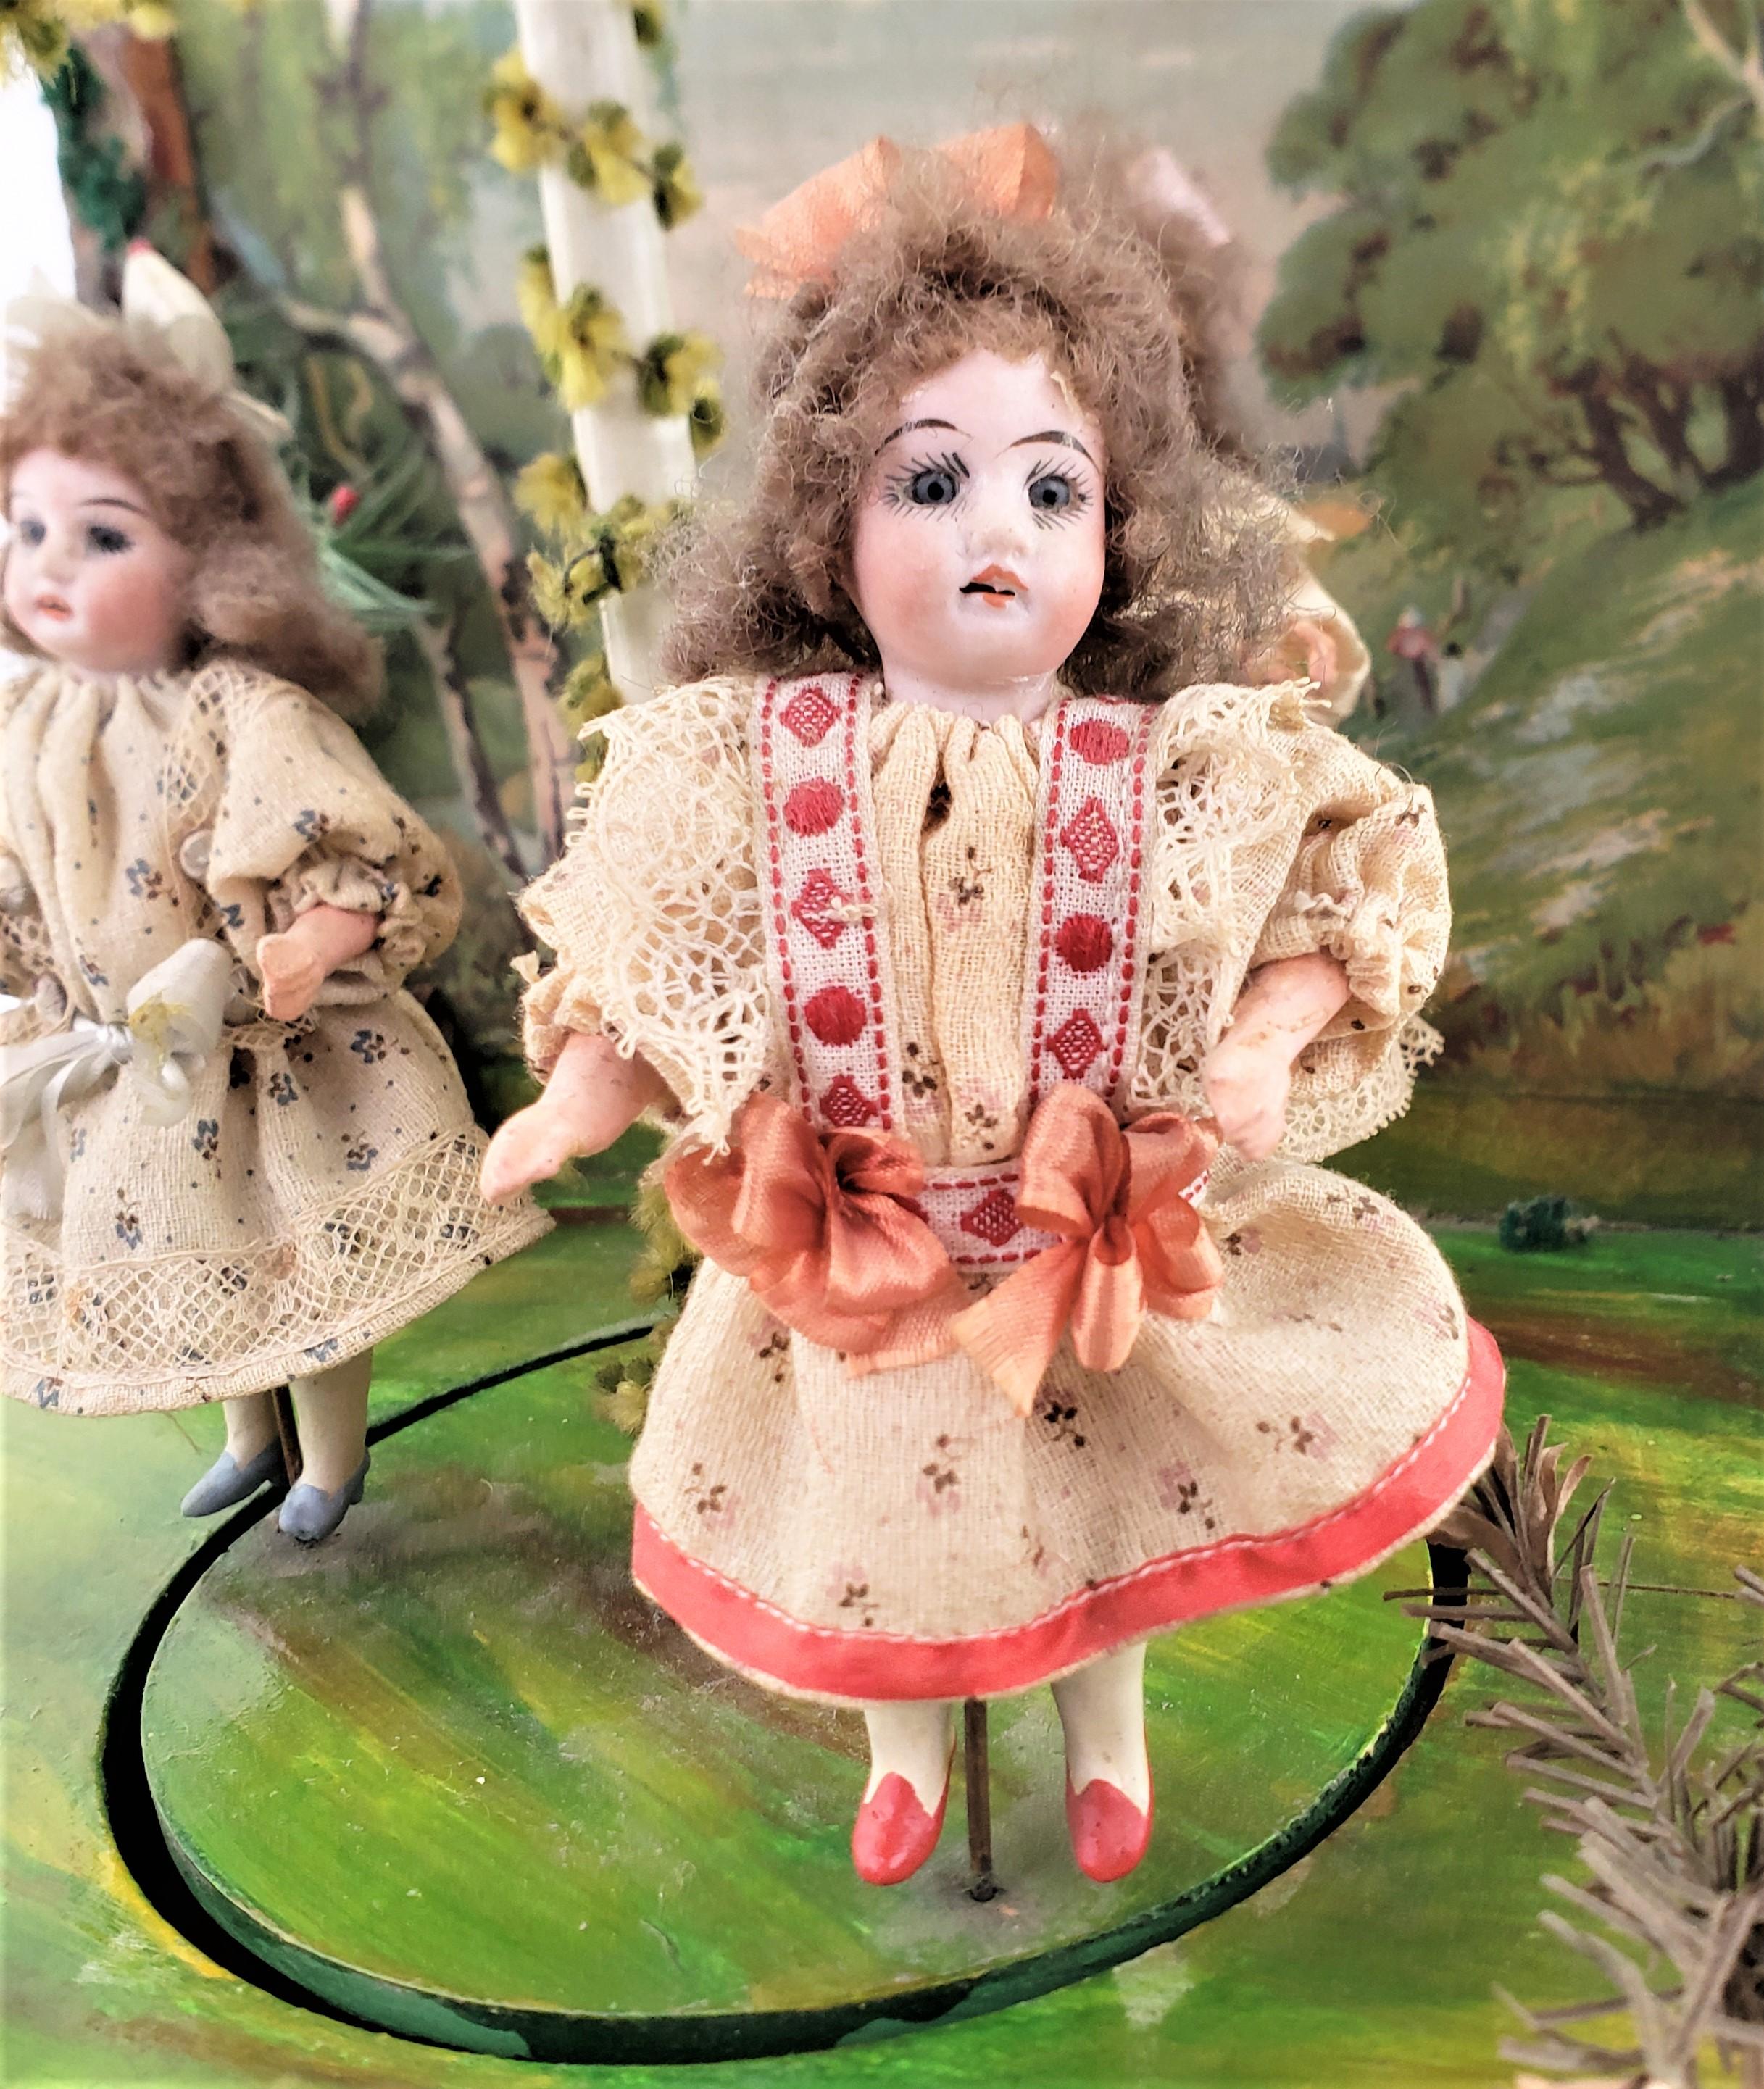 Ceramic Antique German Toy Automaton Music Box with Girls Dancing Around the Maypole